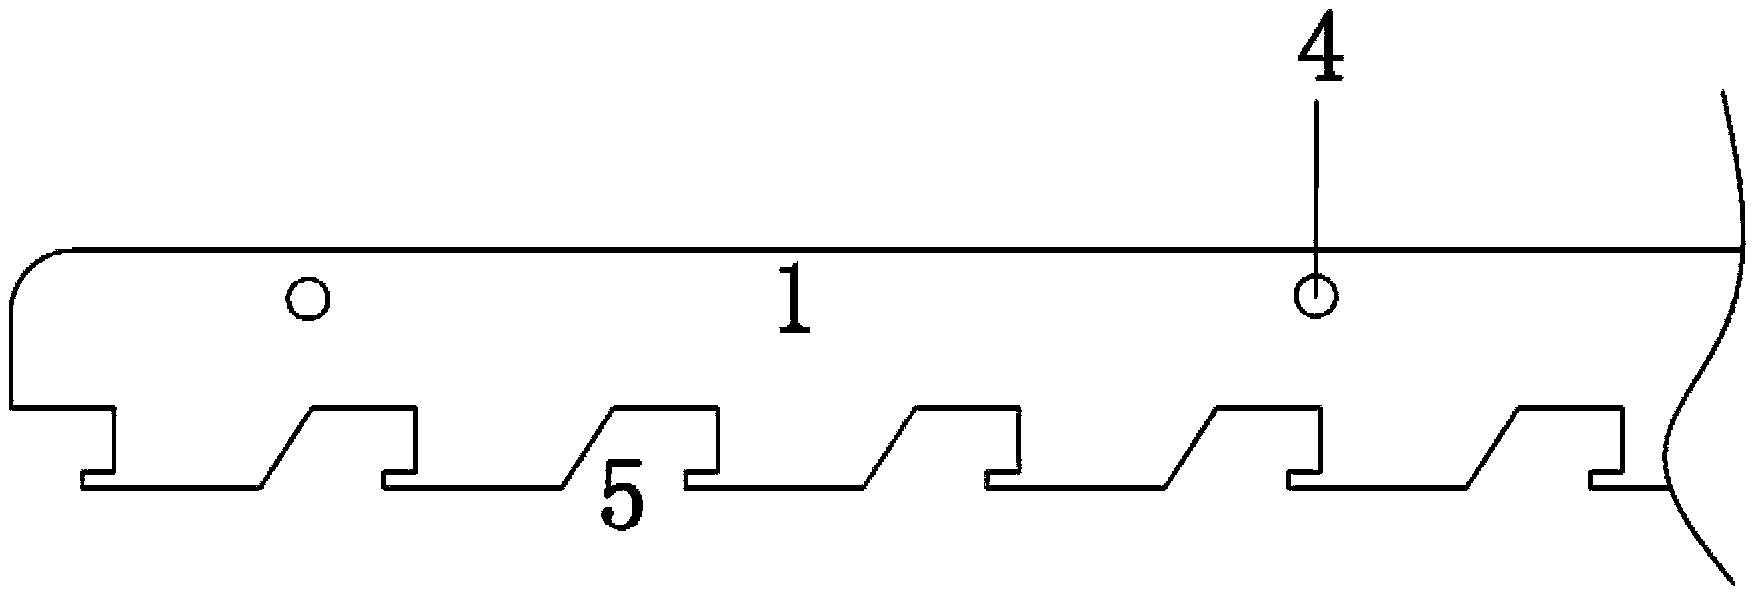 String-up switching mechanism of winding machine